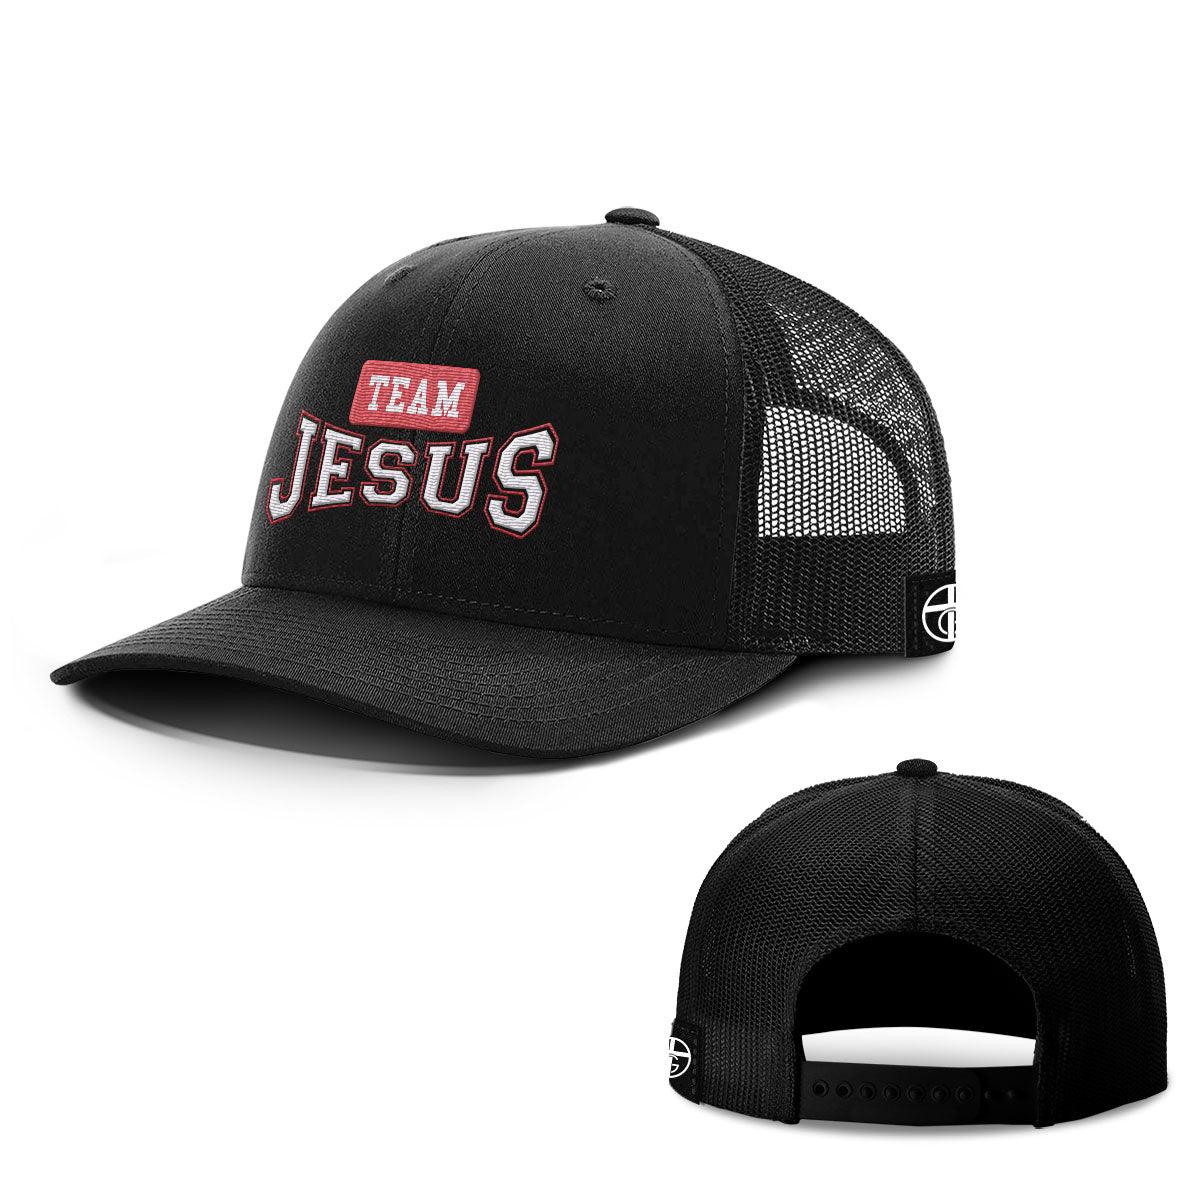 Team Jesus Hats